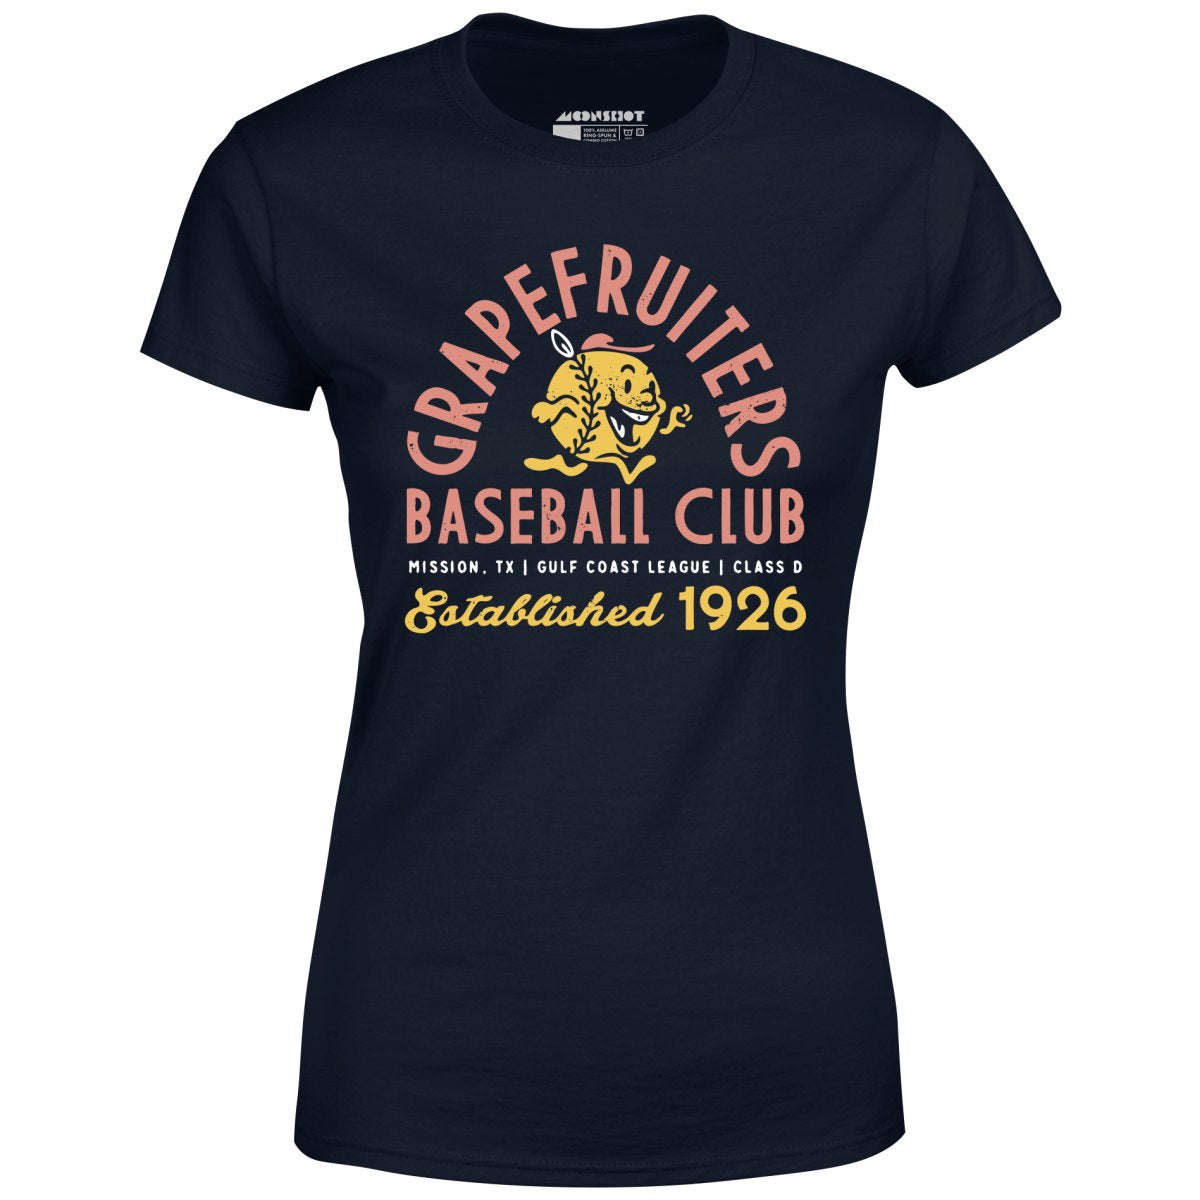 Mission Grapefruiters - Texas - Vintage Defunct Baseball Teams - Women's T-Shirt